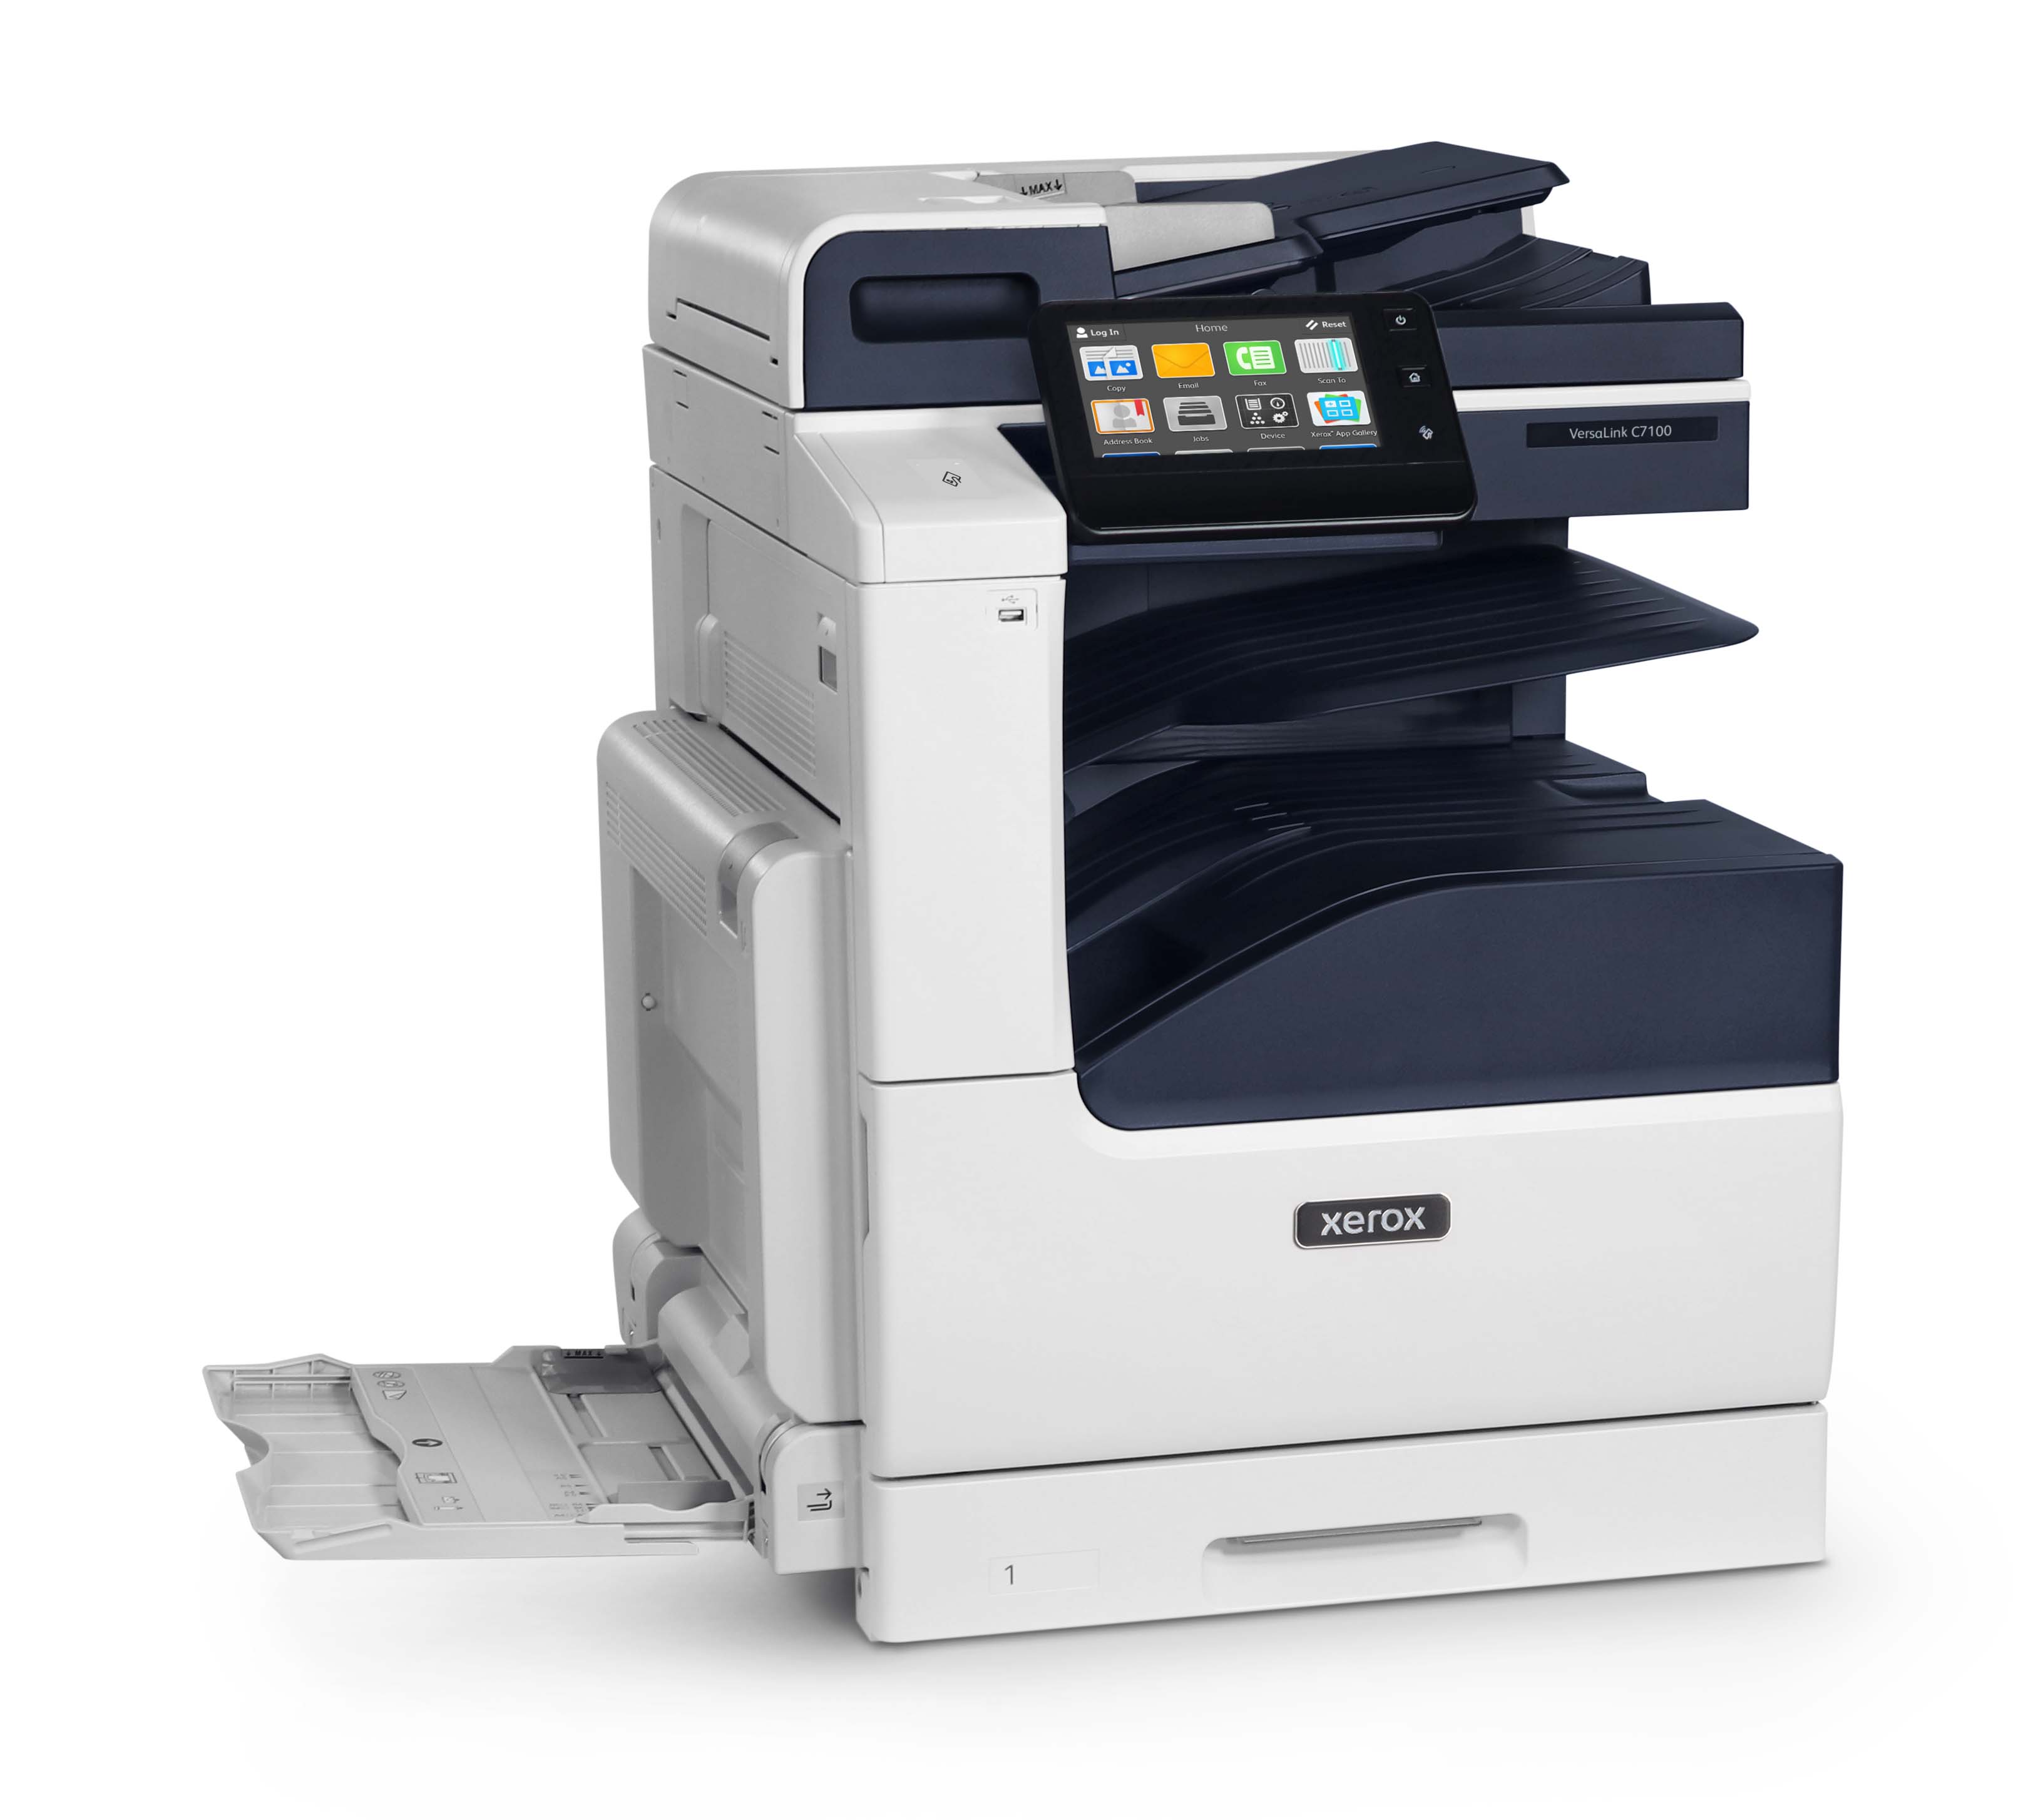 Xerox VersaLink C7125 Colour MultiFunction Printer - Desktop Single tray version